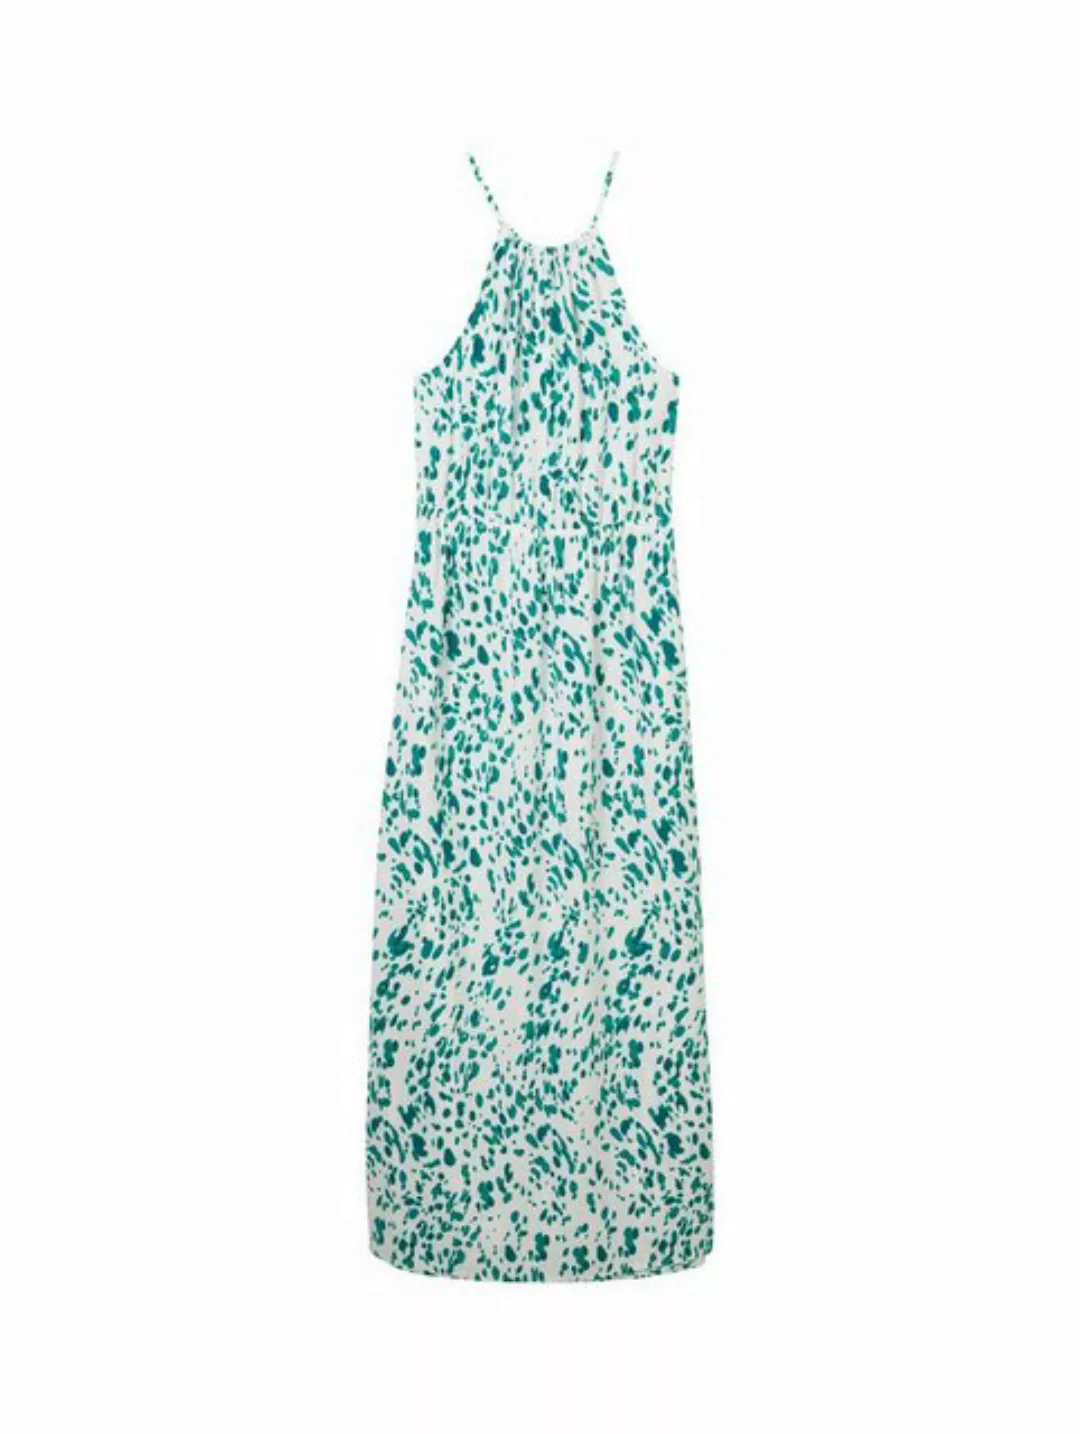 TOM TAILOR Denim Sommerkleid halterneck maxi dress, abstract white dot prin günstig online kaufen